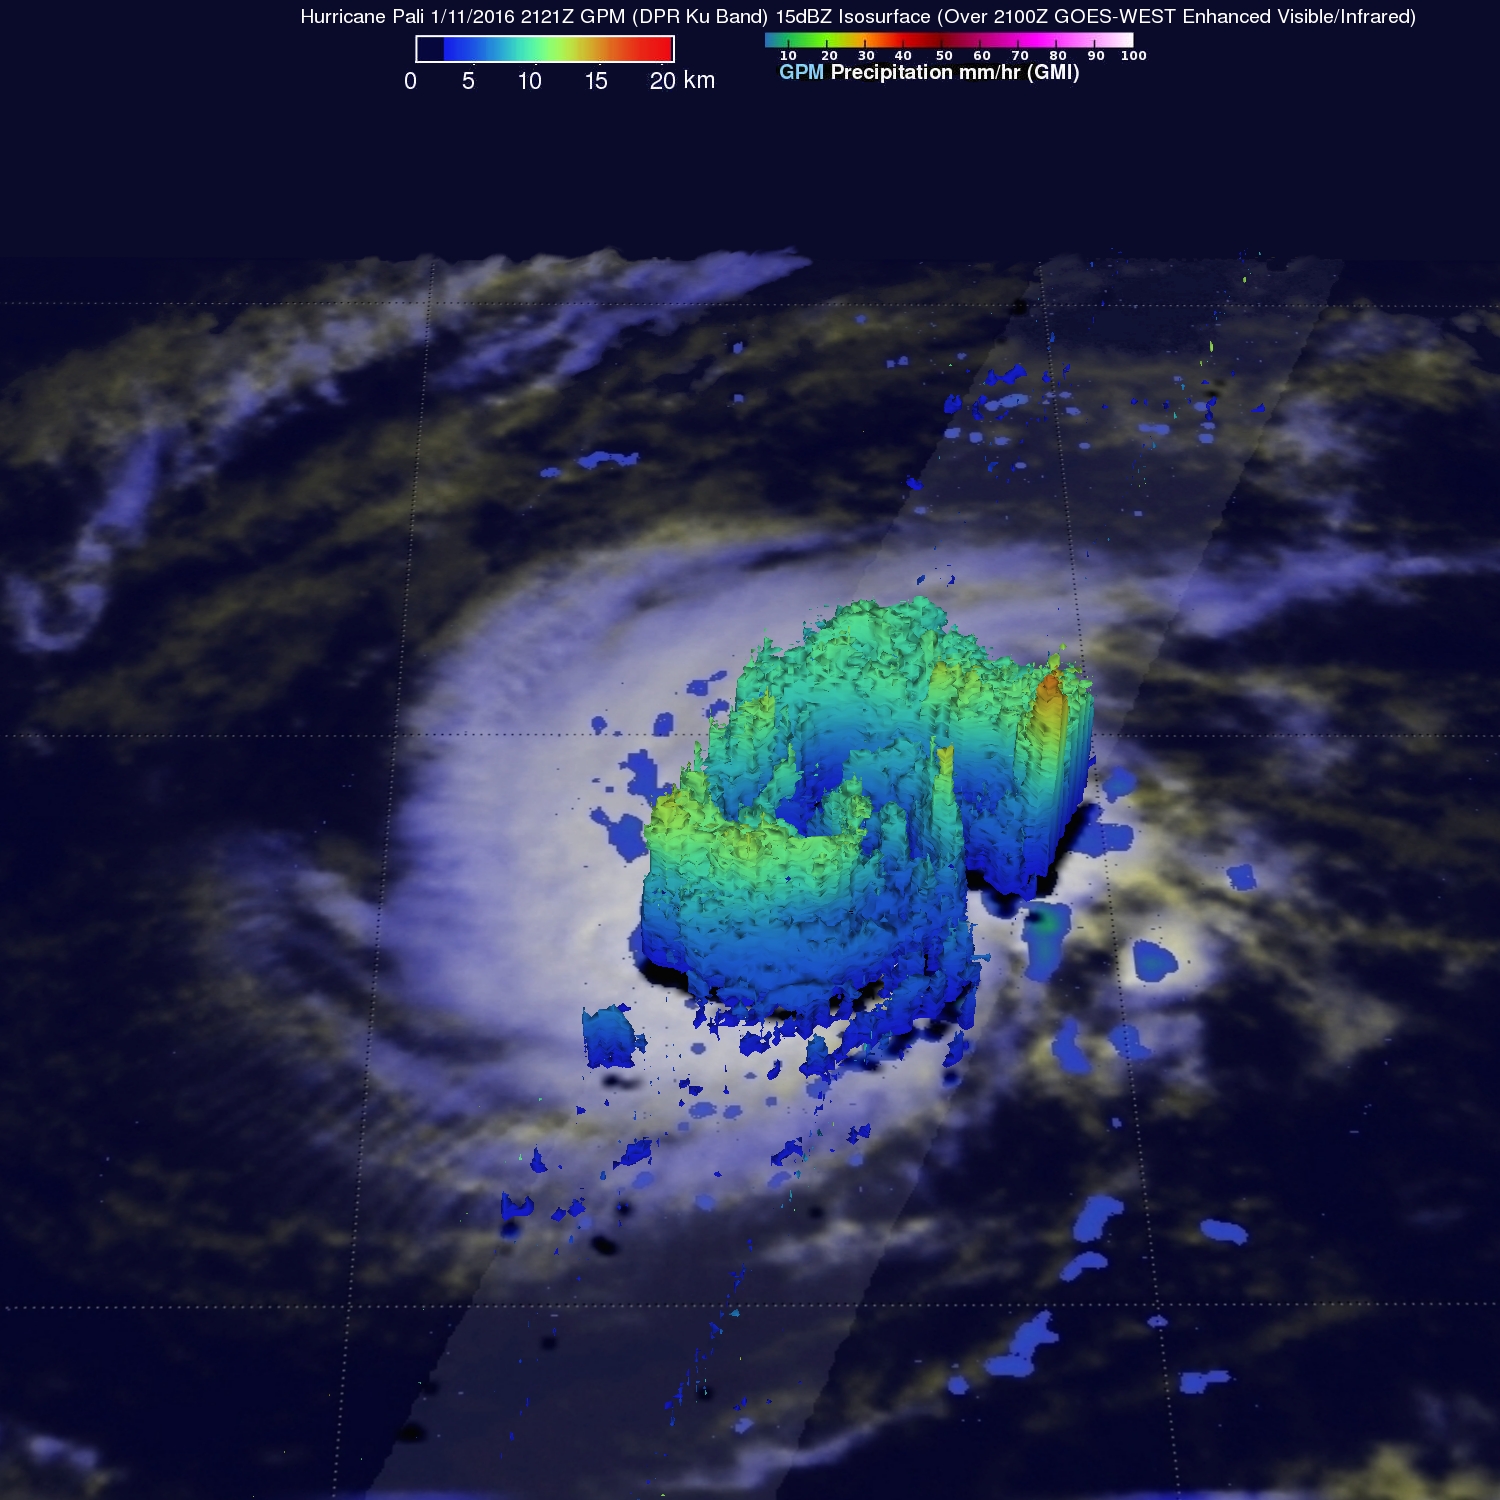 Radar slice of Pali hurricane showing an eye